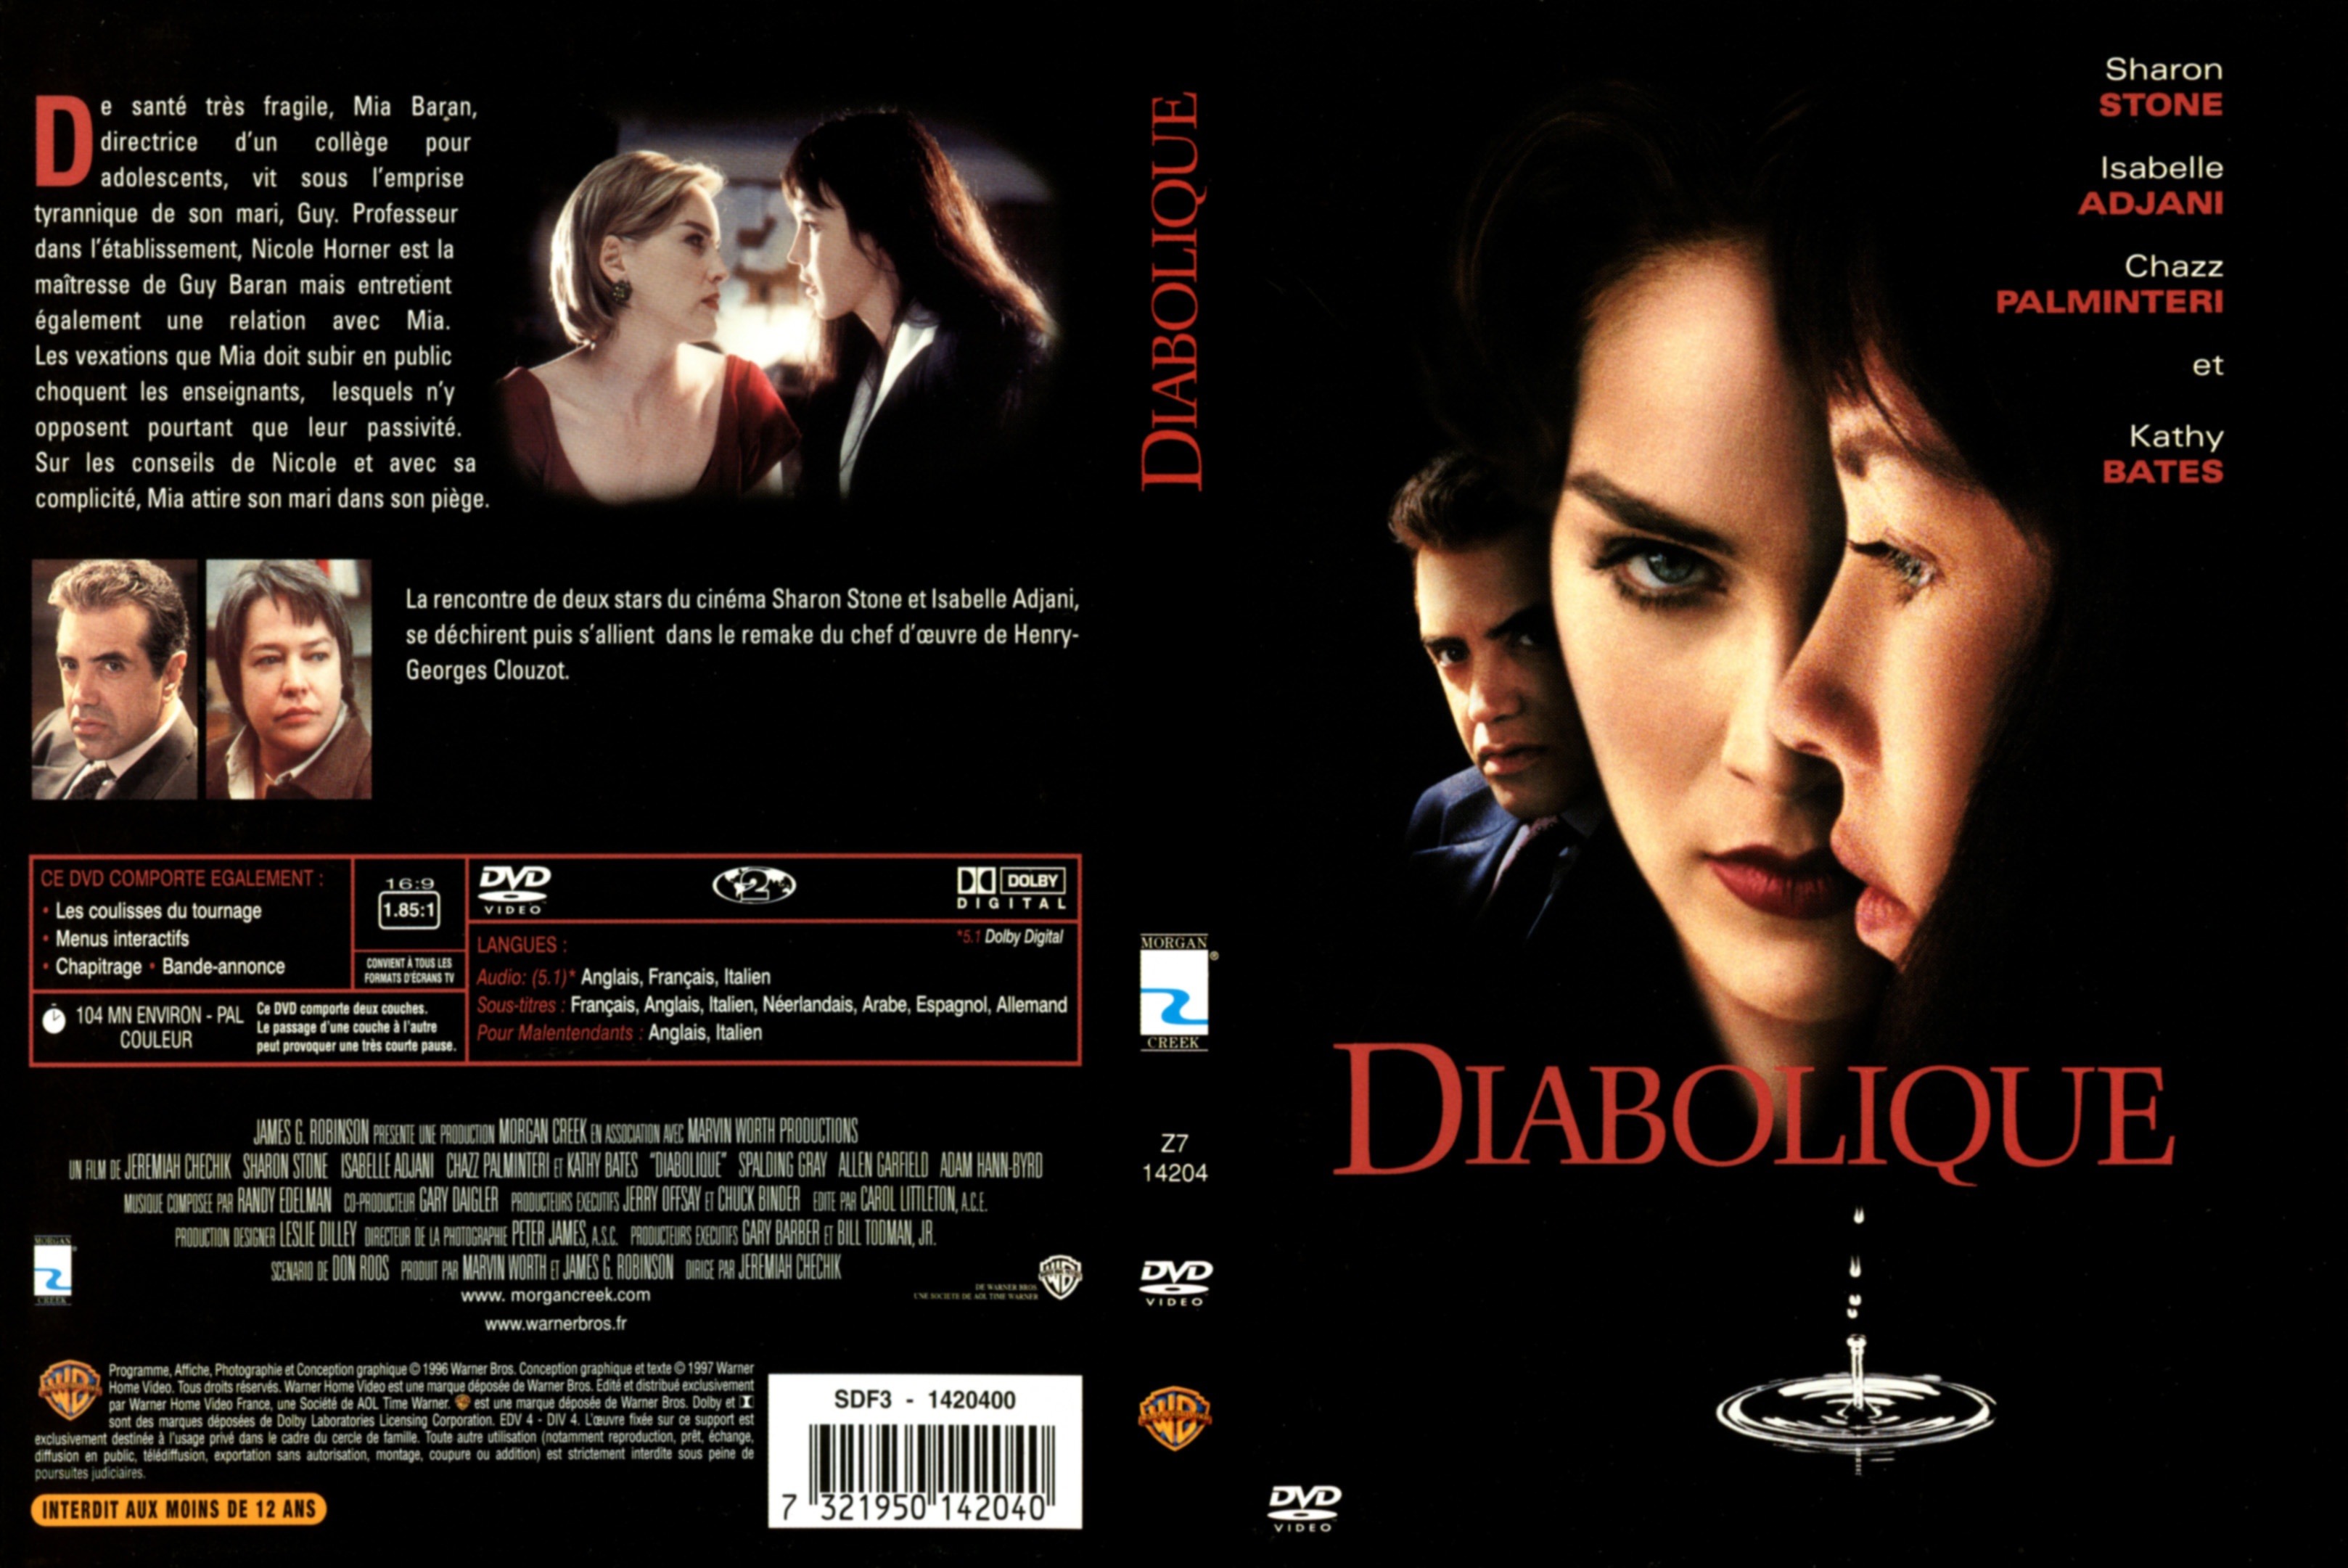 Jaquette DVD Diabolique v2